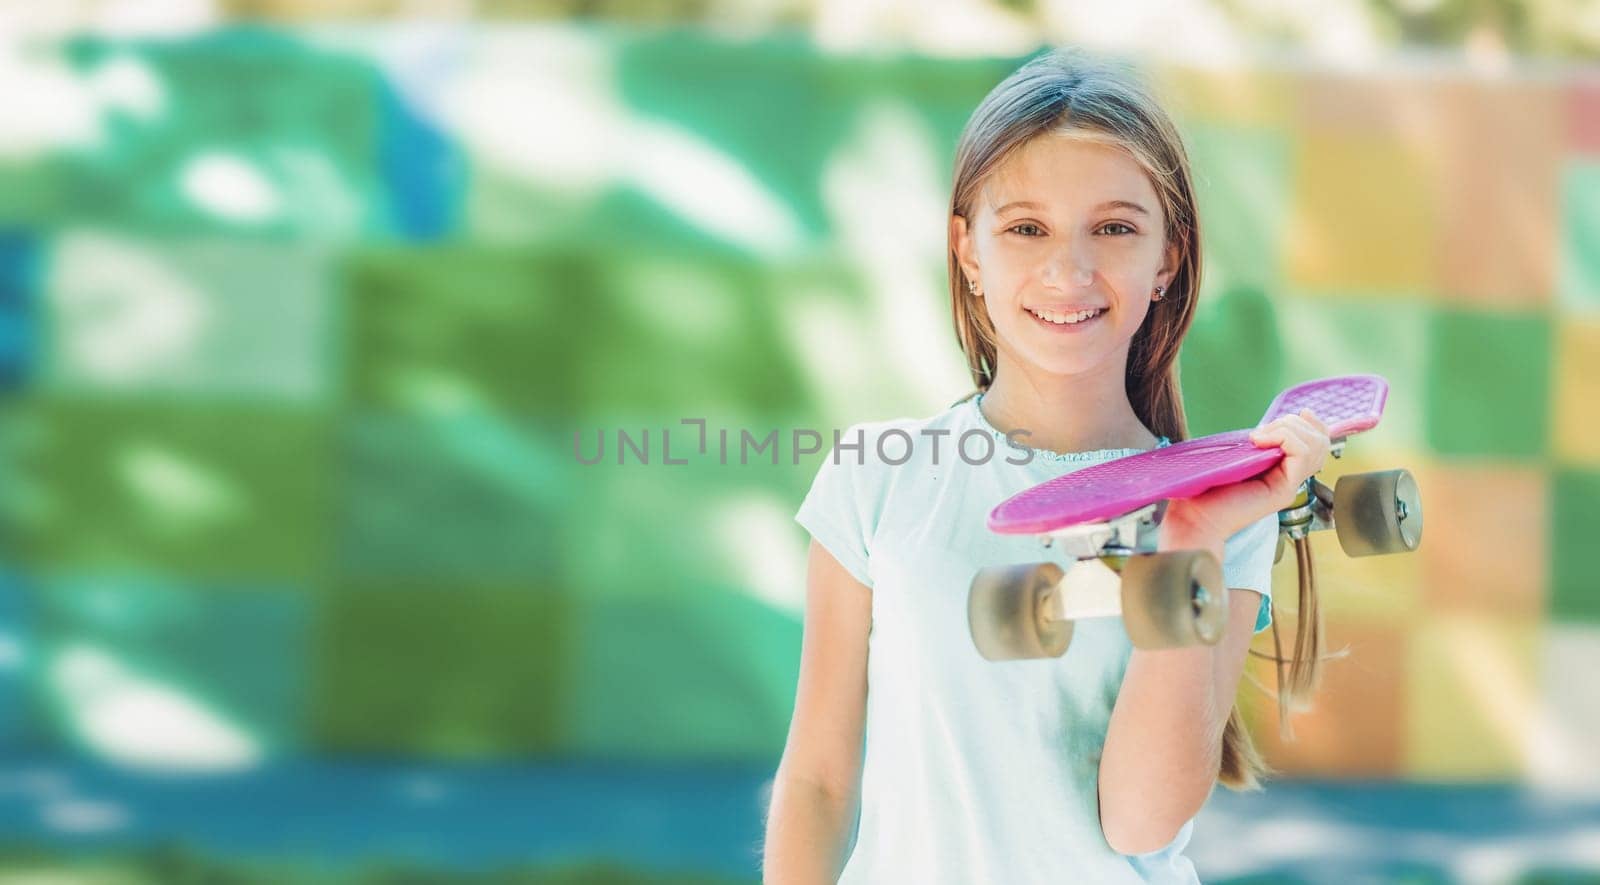 Smiling girl holding pink skateboard by GekaSkr